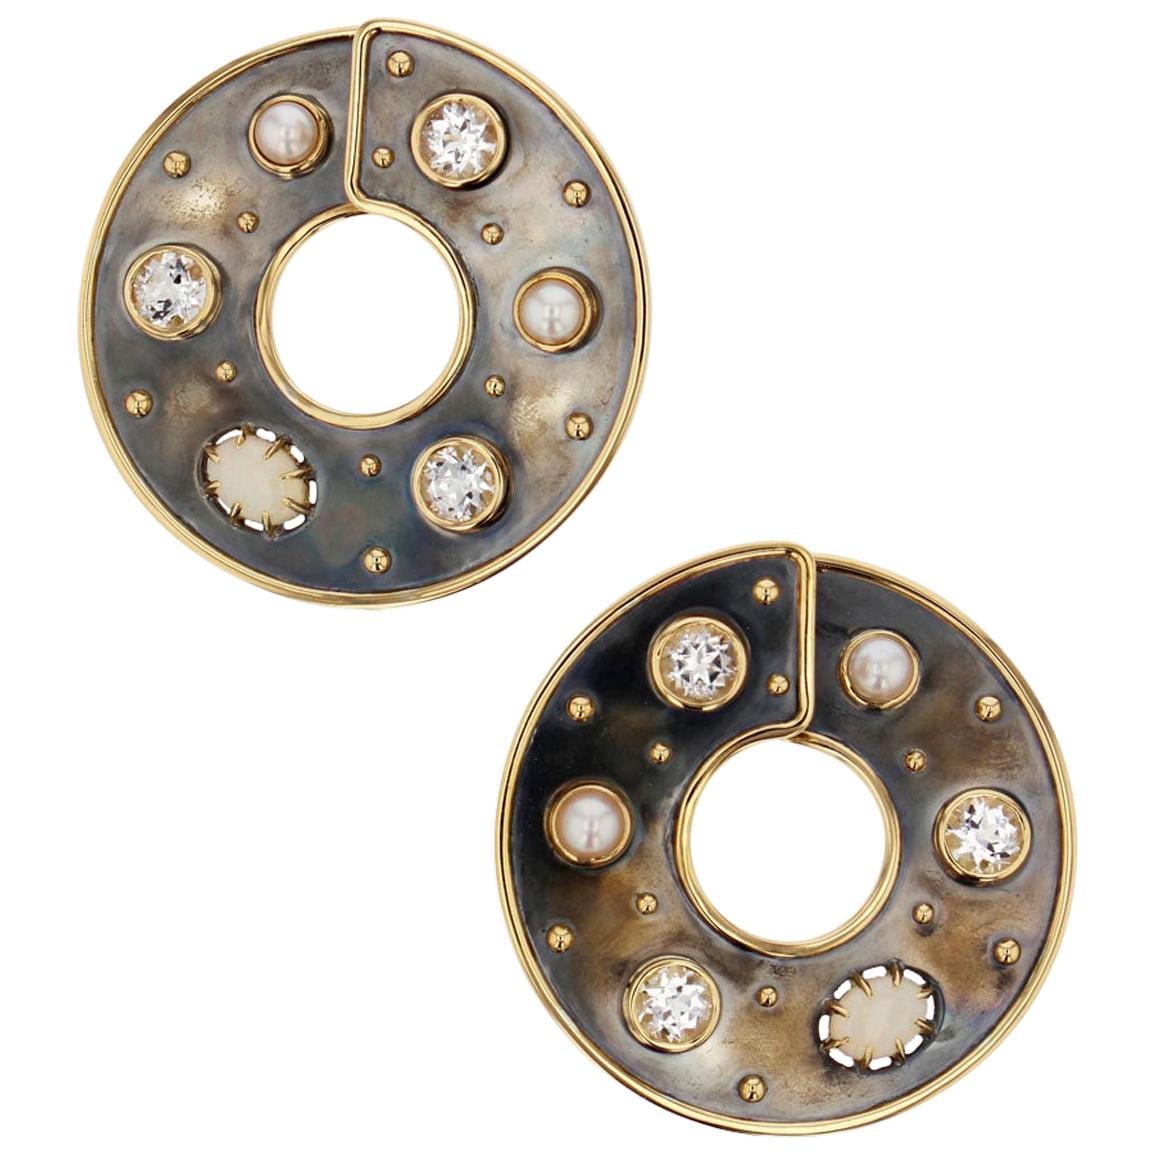 Opal Topaz Bandeau Earrings set with Pearls in 18k gold by Elie Top